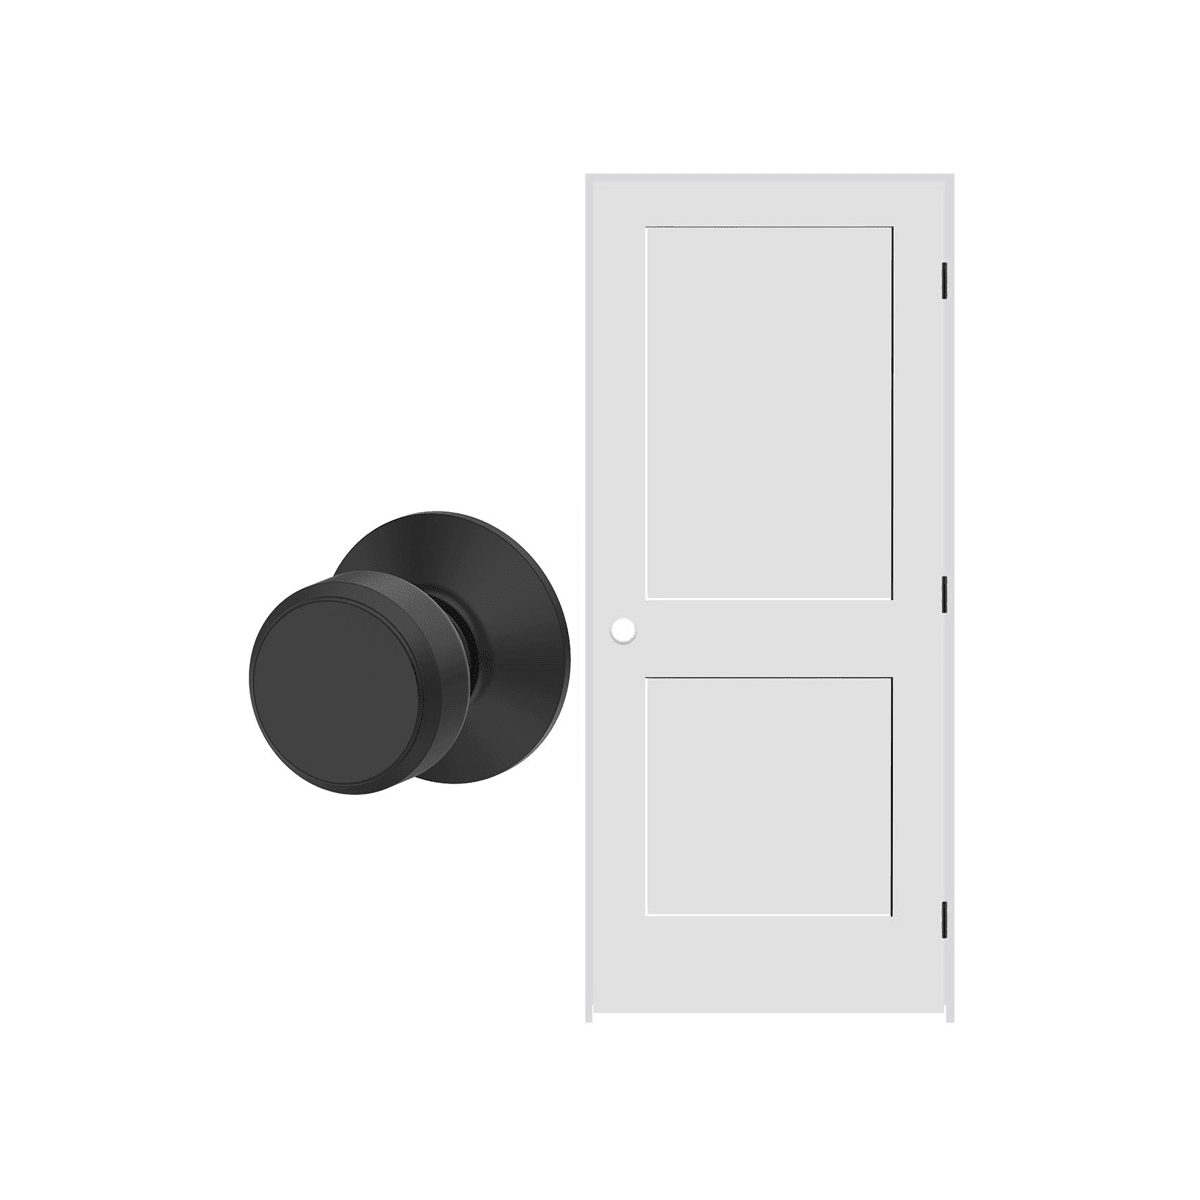 30mmx26mm Home Cabin Room Door Lock Closet Small Security Padlock with Key